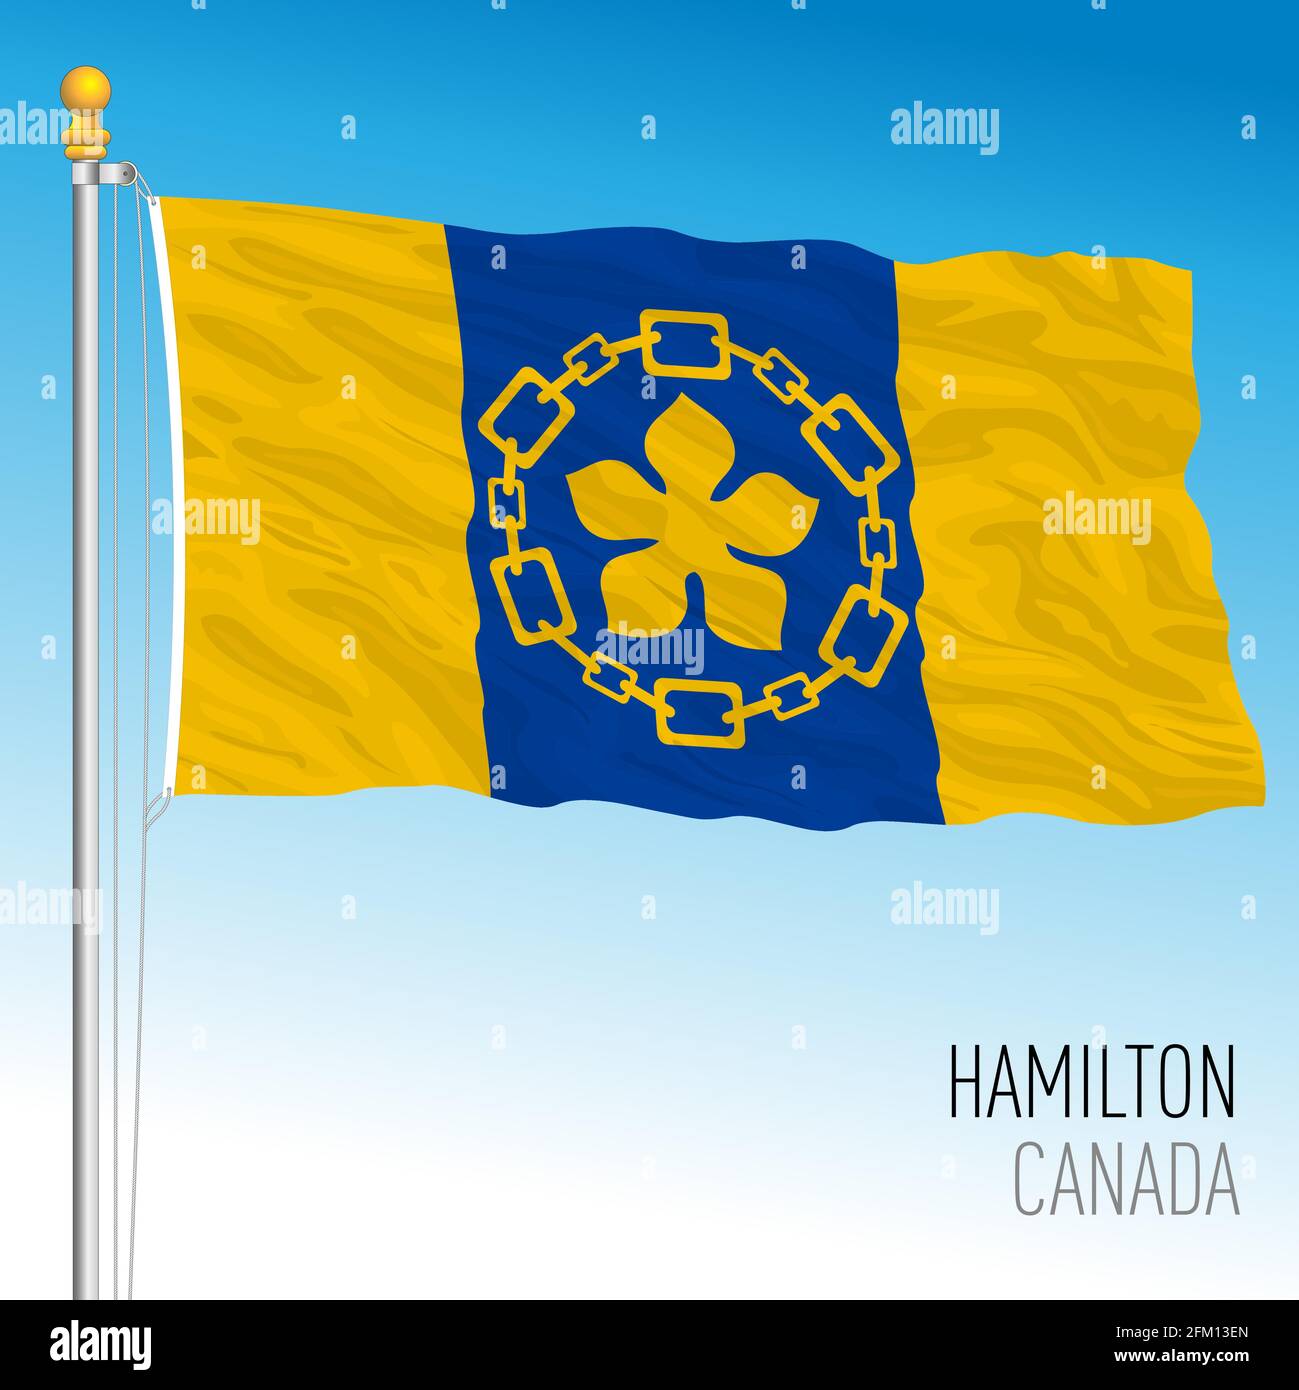 City of Hamilton flag, Canada, north american country, vector illustration Stock Vector